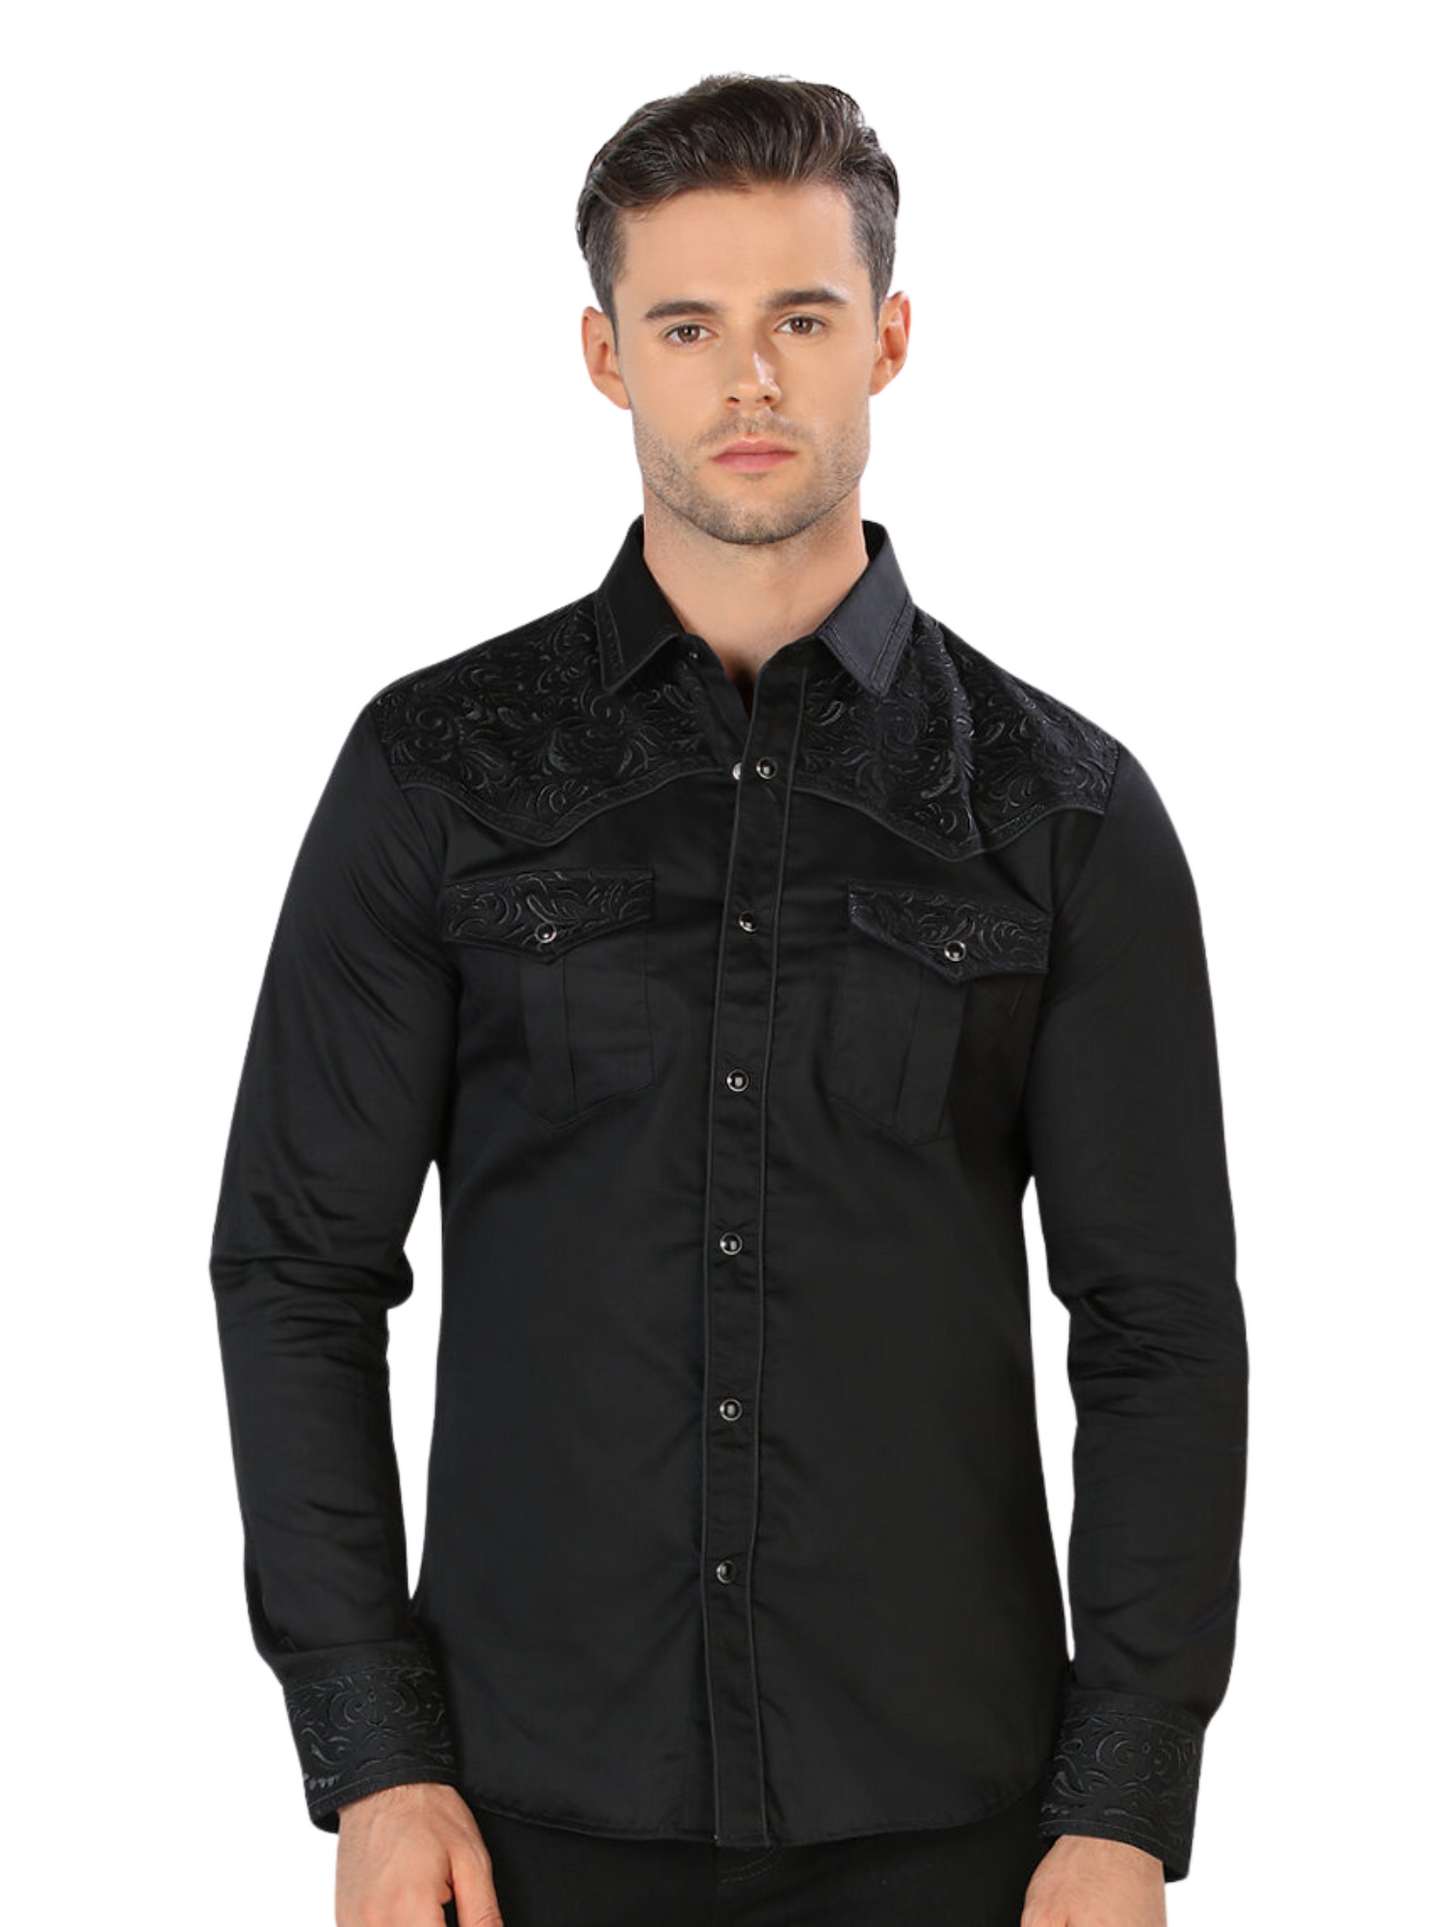 Embroidered Long Sleeve Denim Shirt for Men 'Montero' - ID: 3537 Western Shirt Montero Black/Black